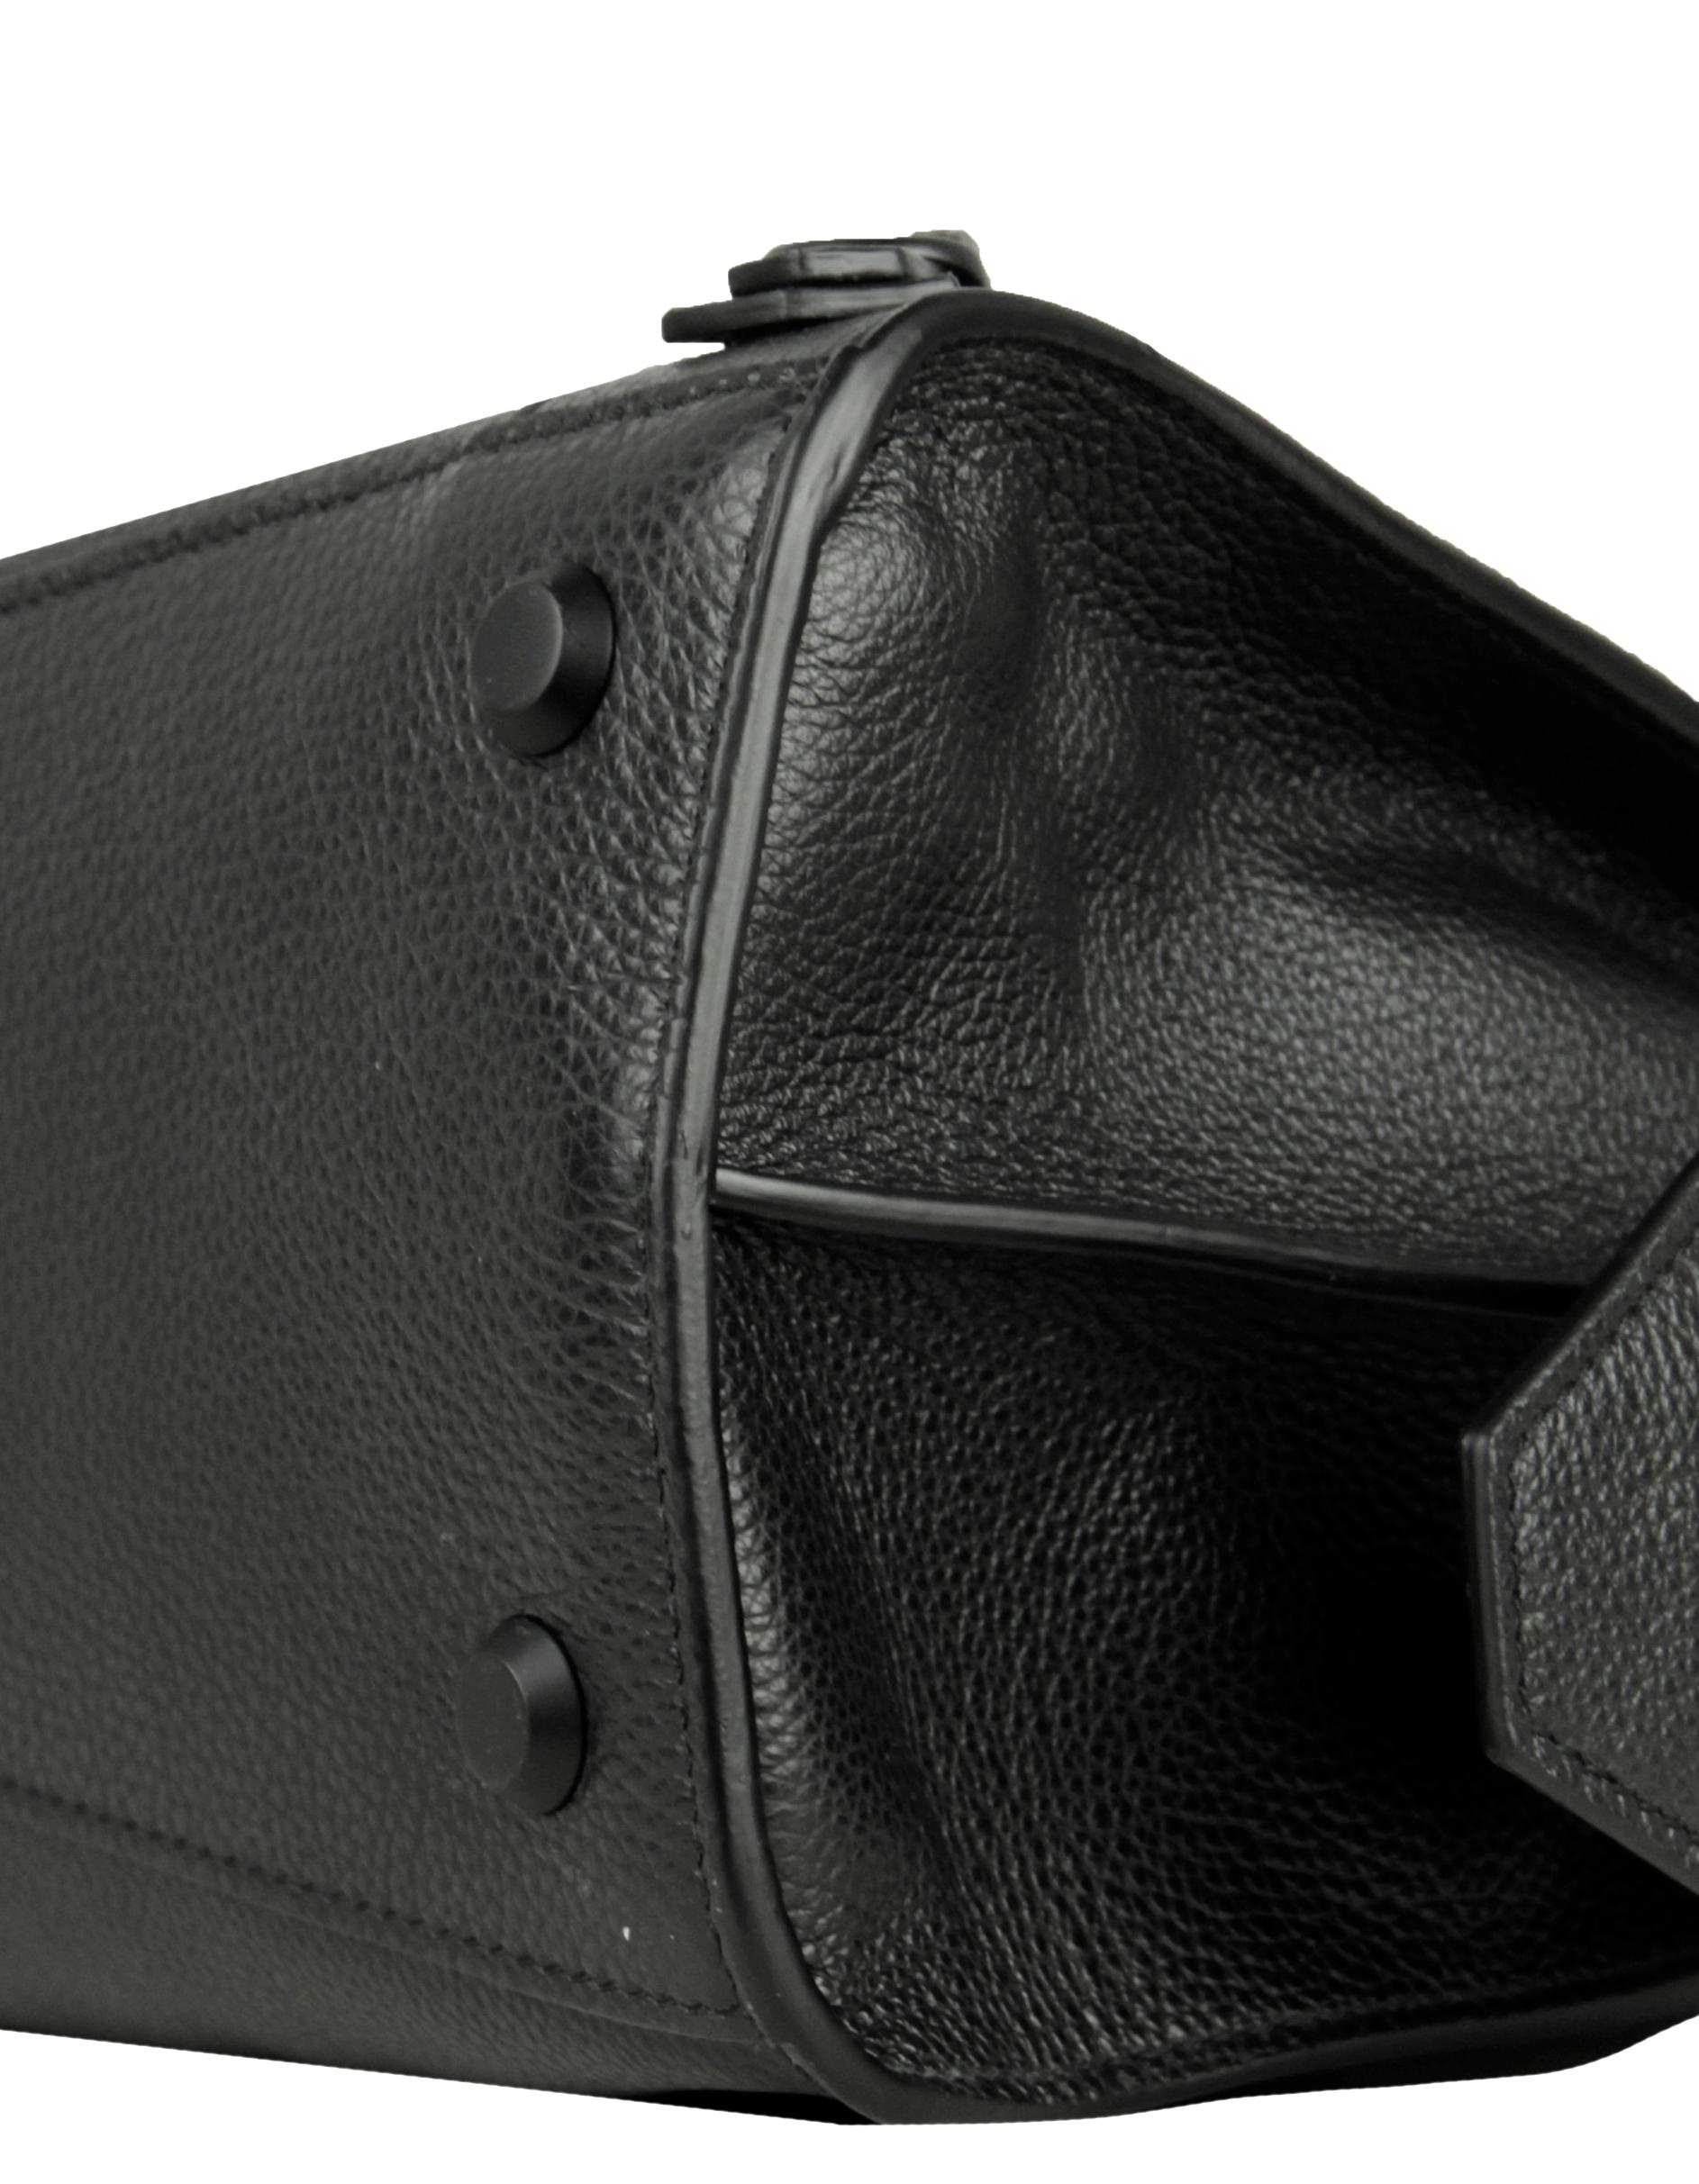 Balenciaga Black Grained Calfskin Leather Neo Classic Hardware S City Bag For Sale 1